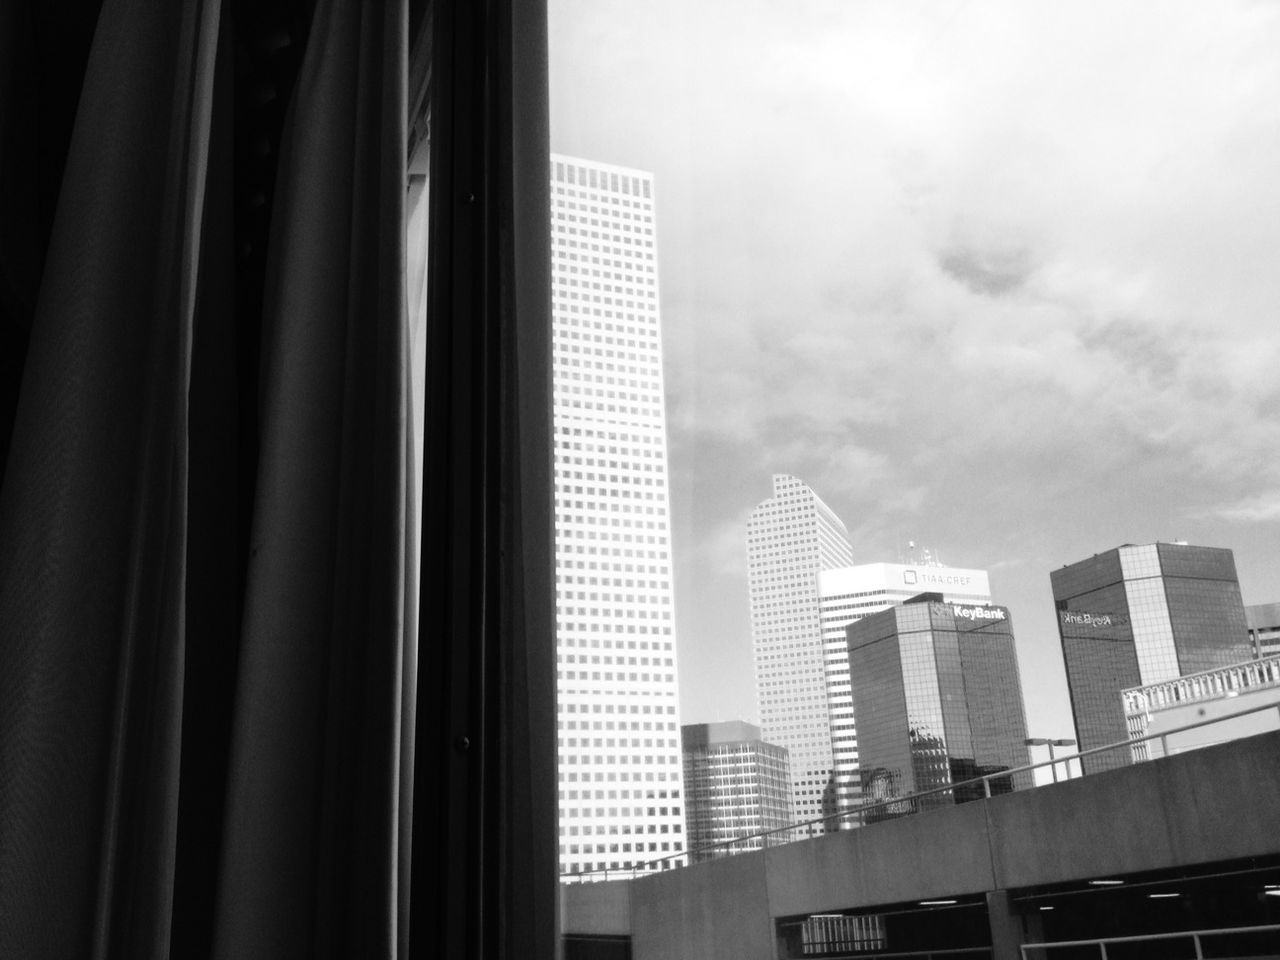 View of modern skyscrapers seen through window